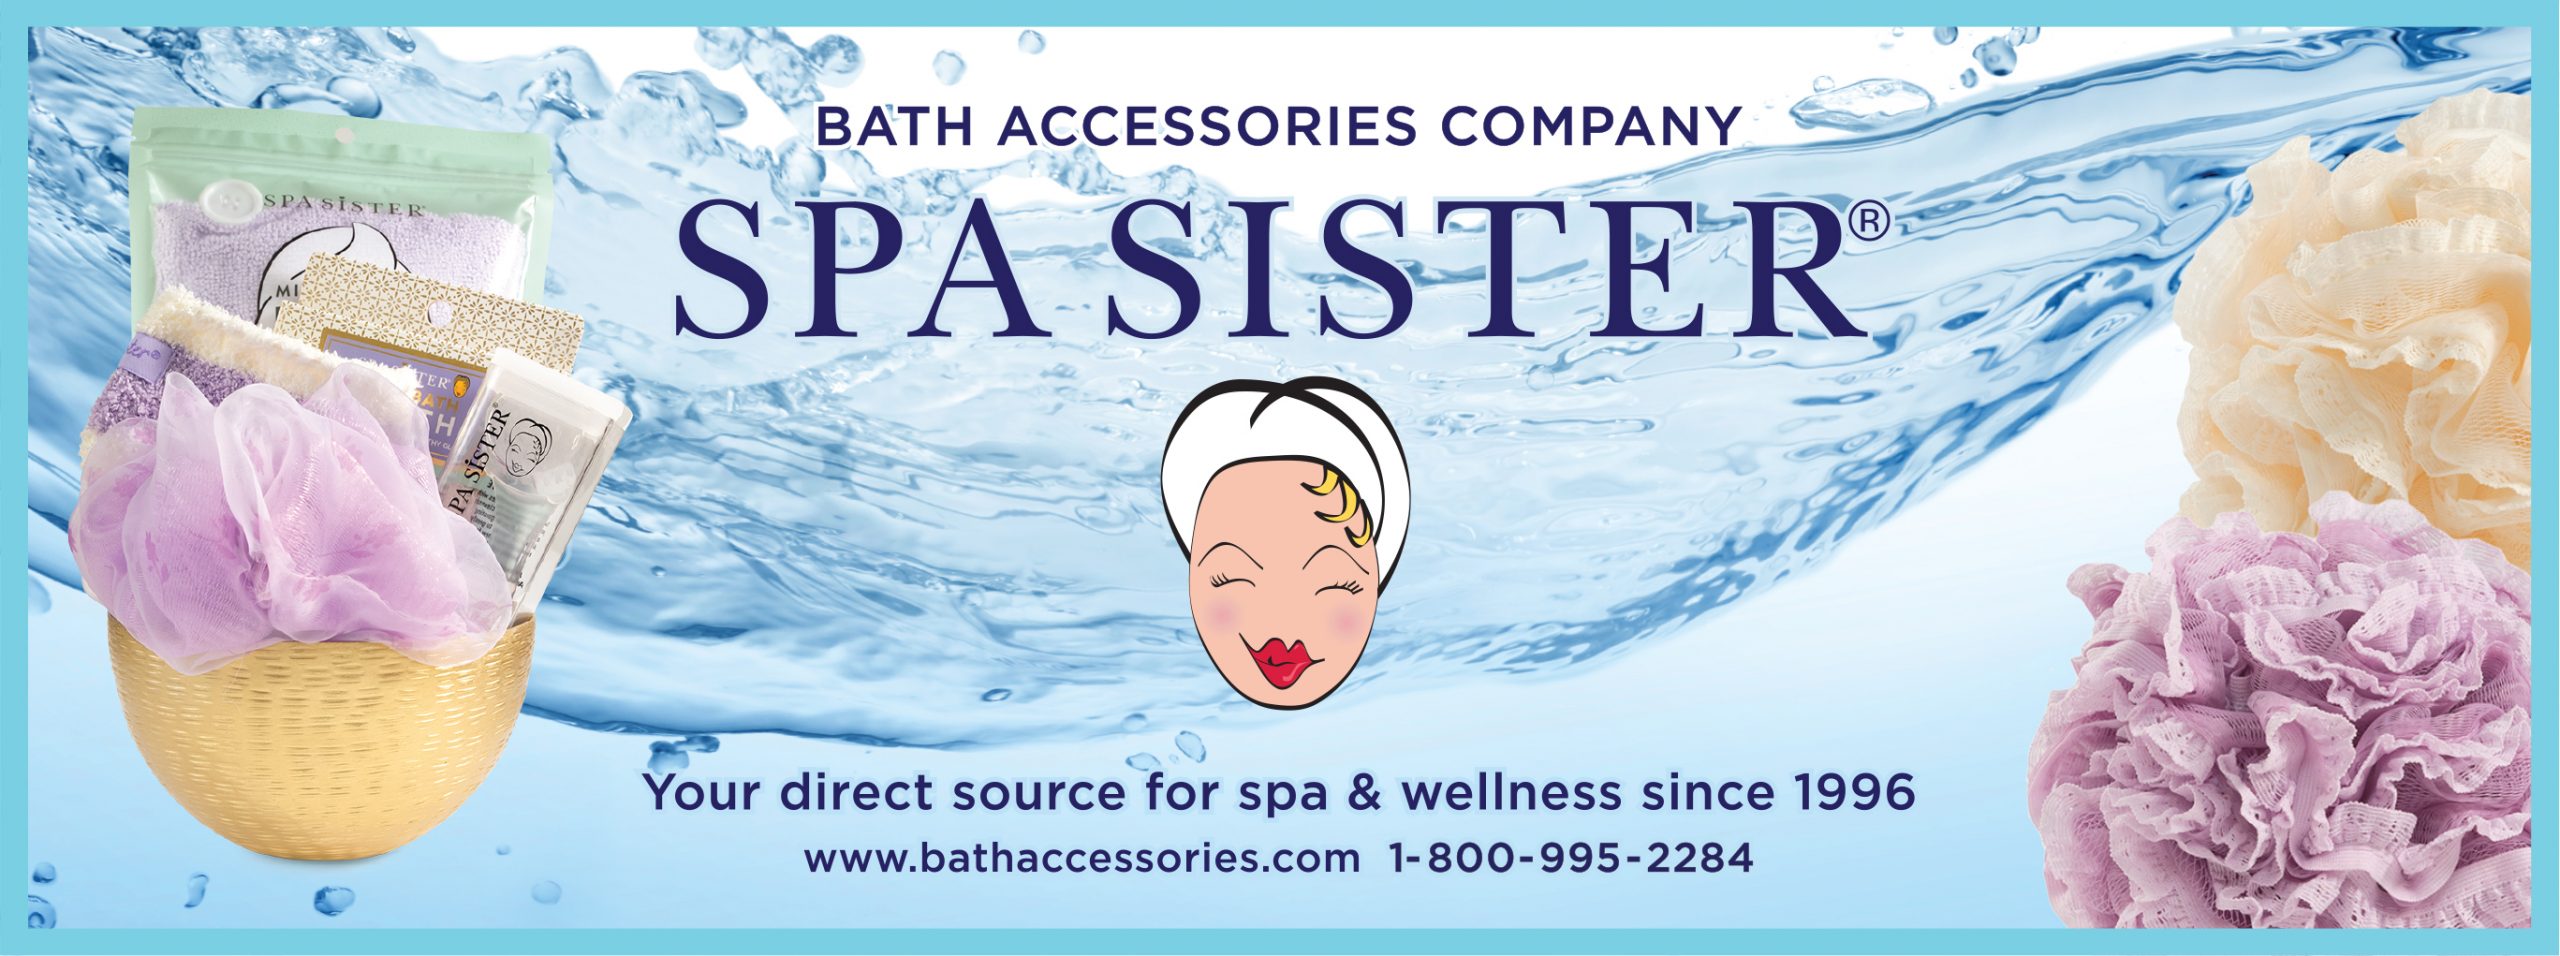 Bath accessories banner ad